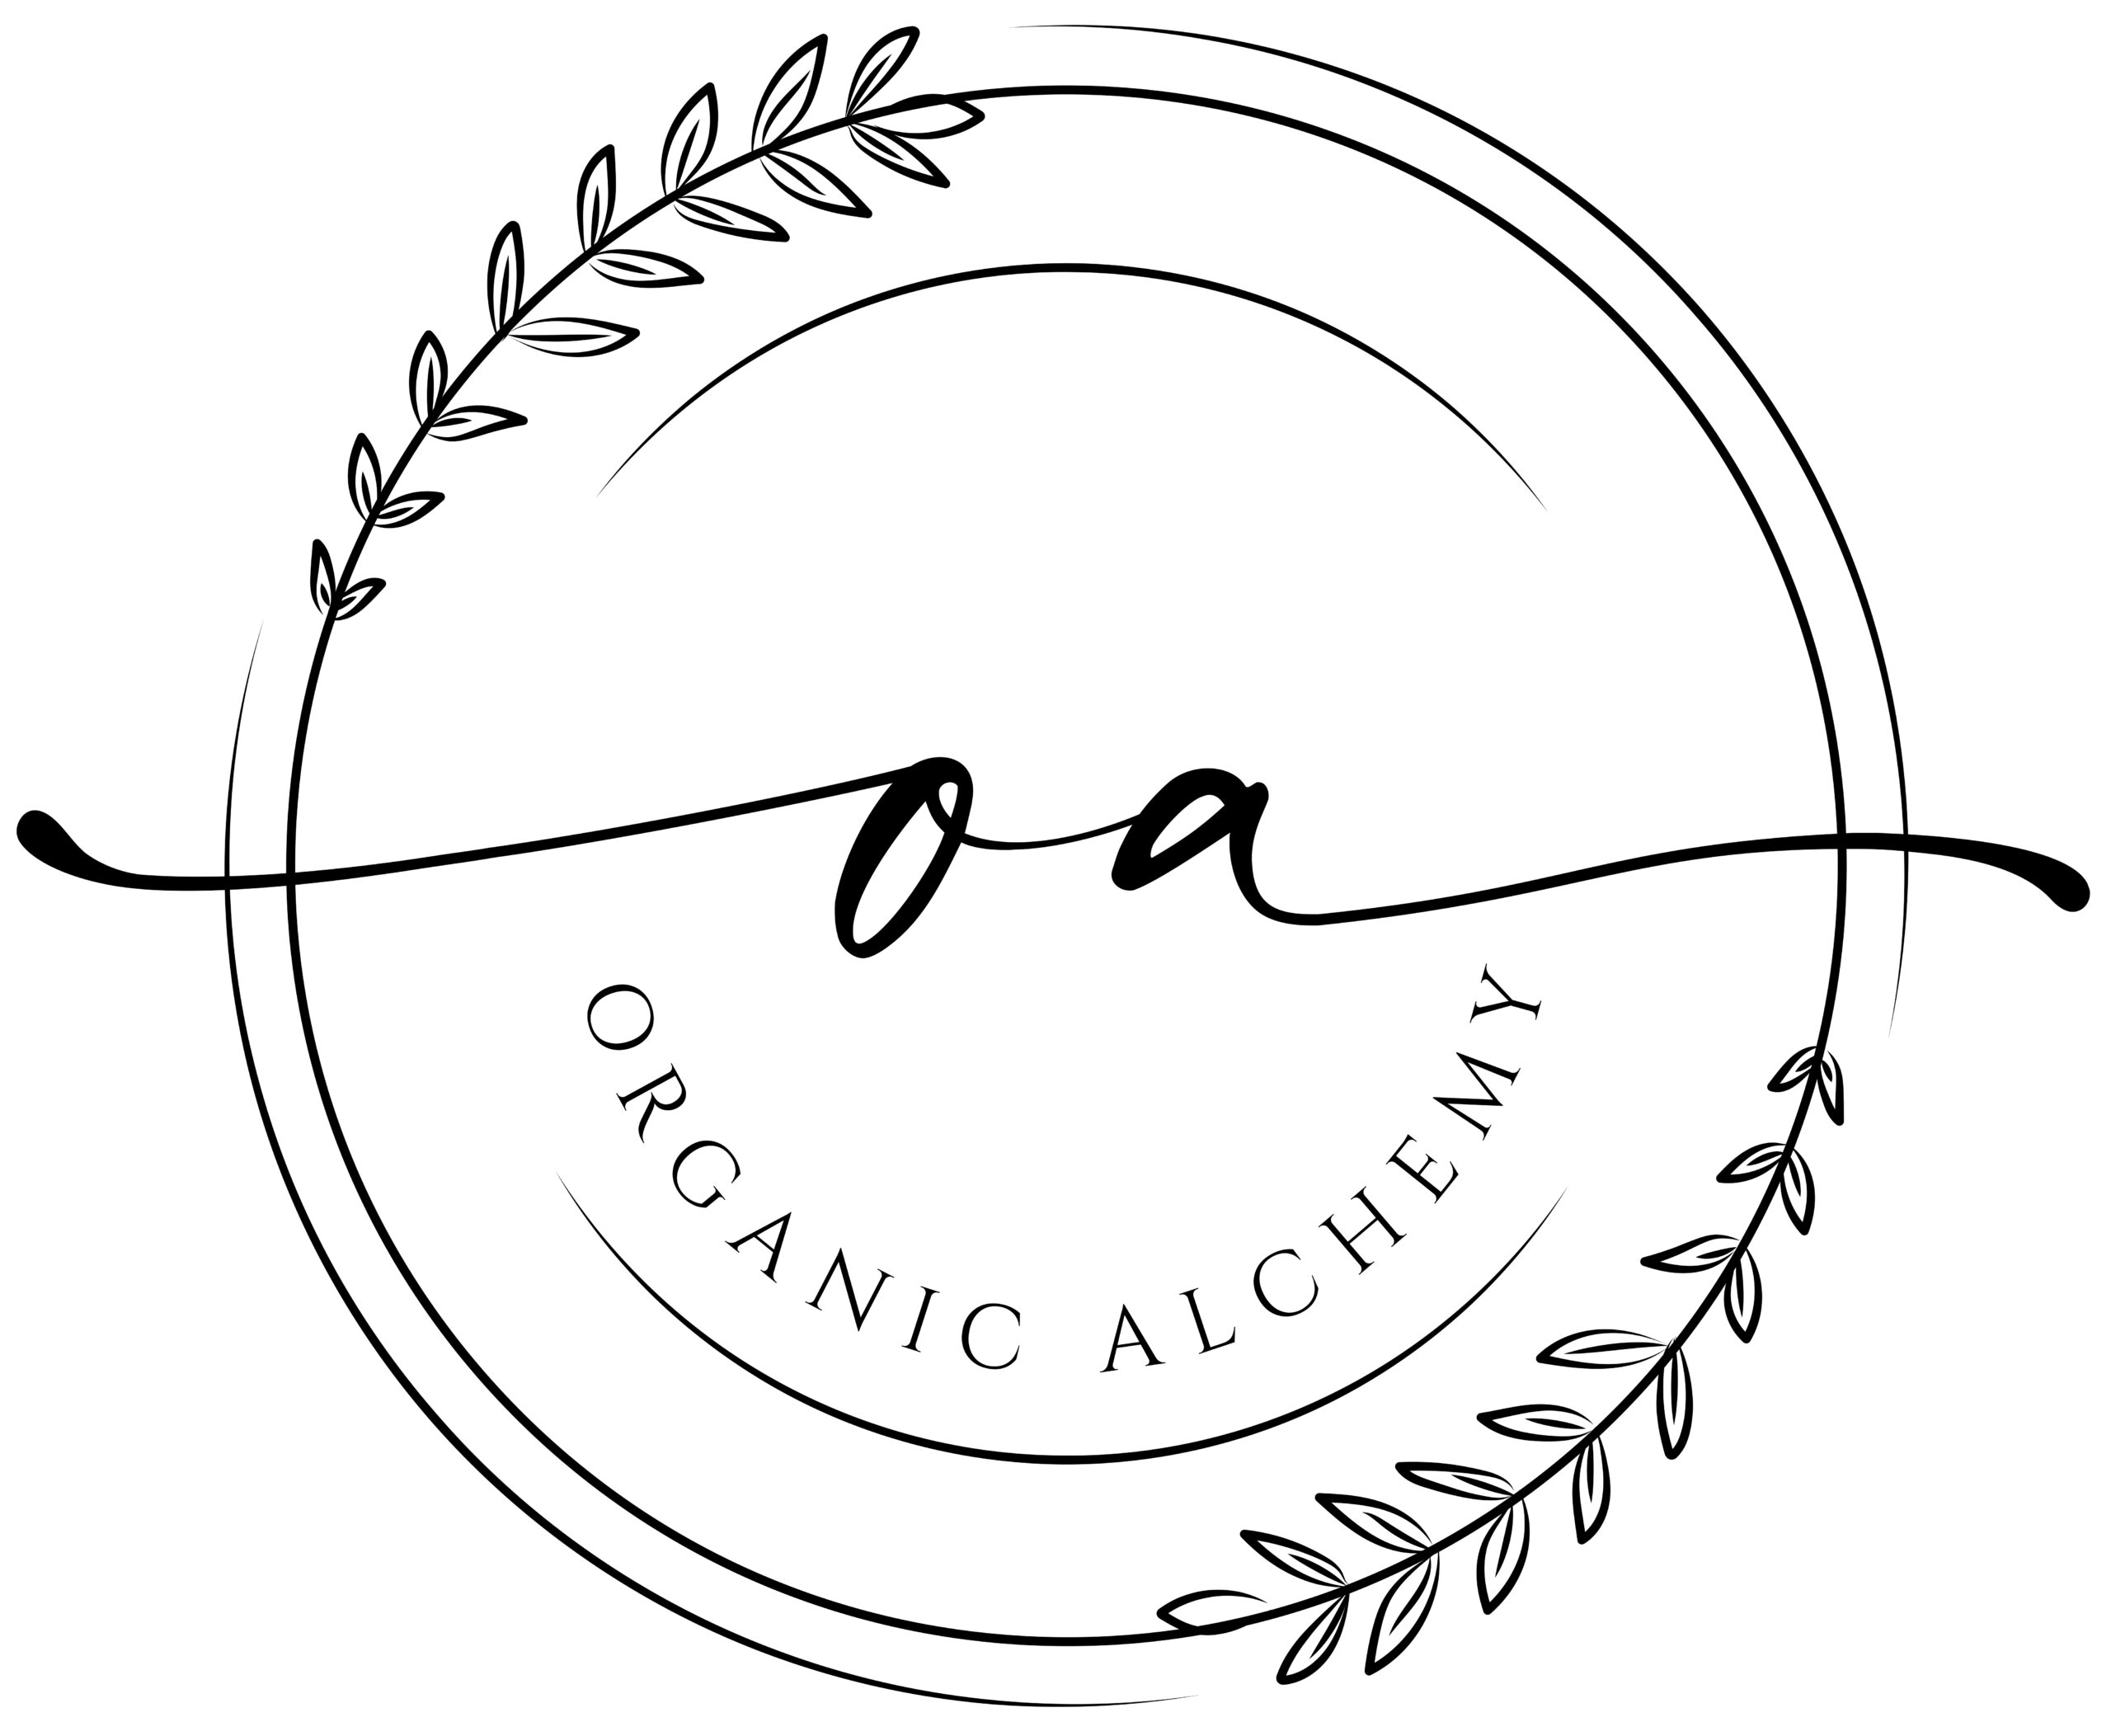 Organic Alchemy